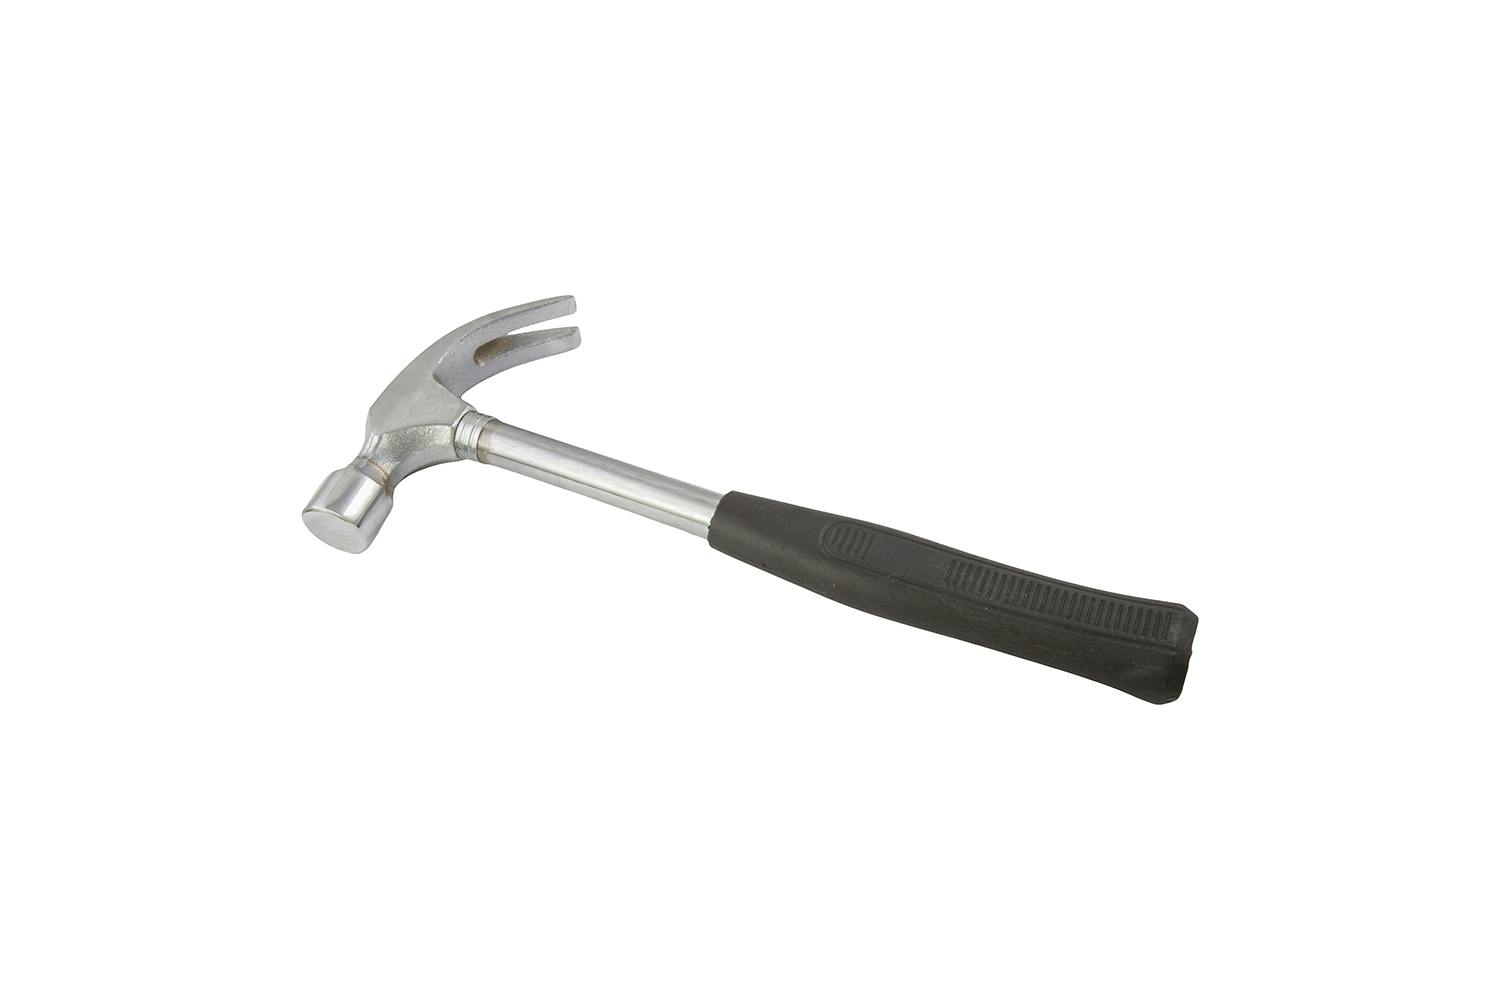 Mcanax Hammer Steel Shaft Claw | 16oz